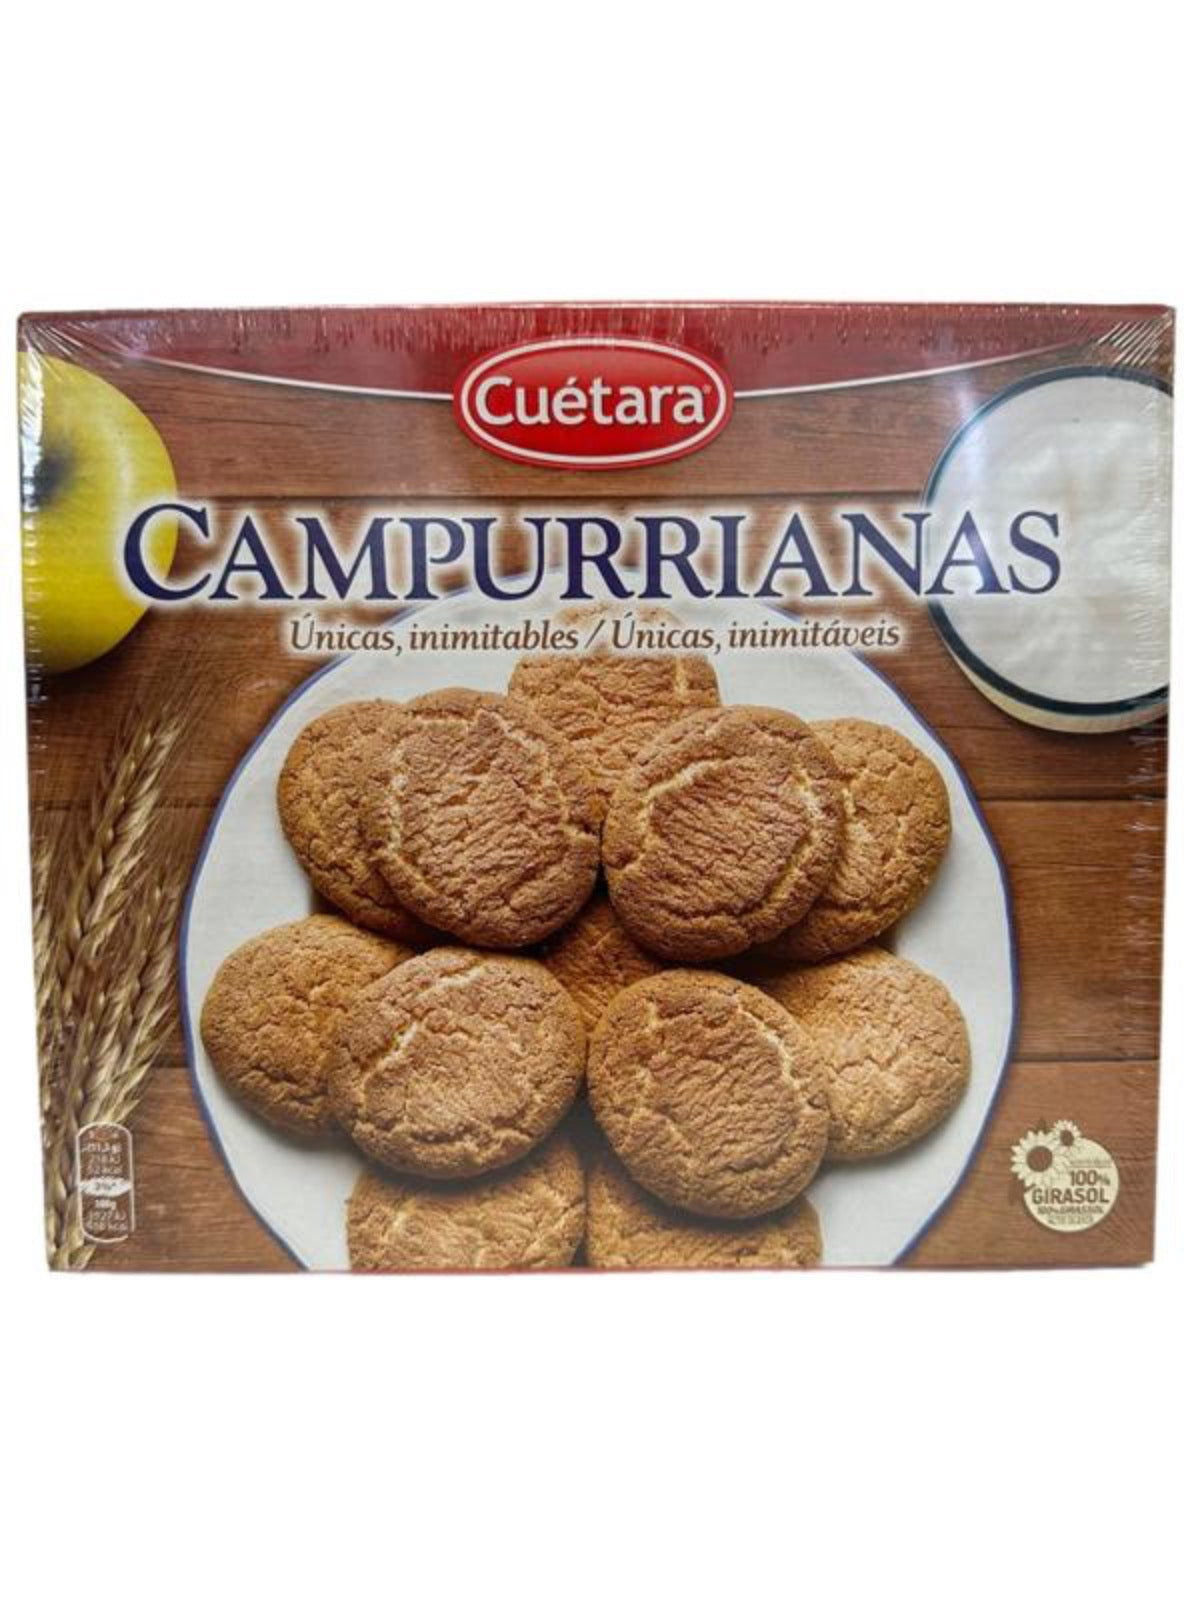 Cuetara Campurrianas Rustic Spanish Biscuits 466g